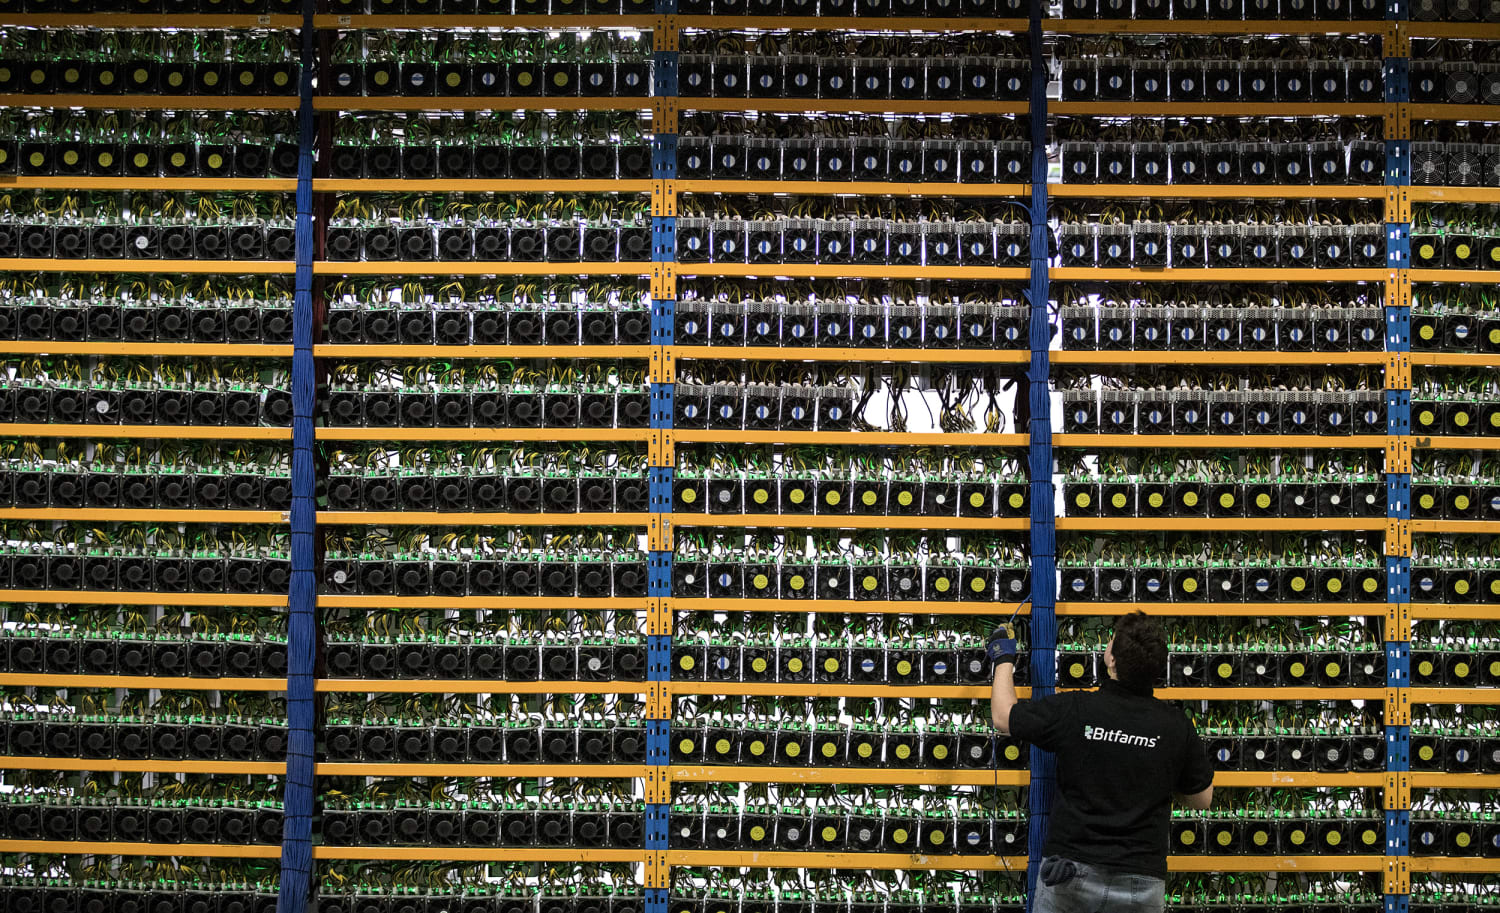 Tutorial minerando bitcoins buy ethereum 39 million